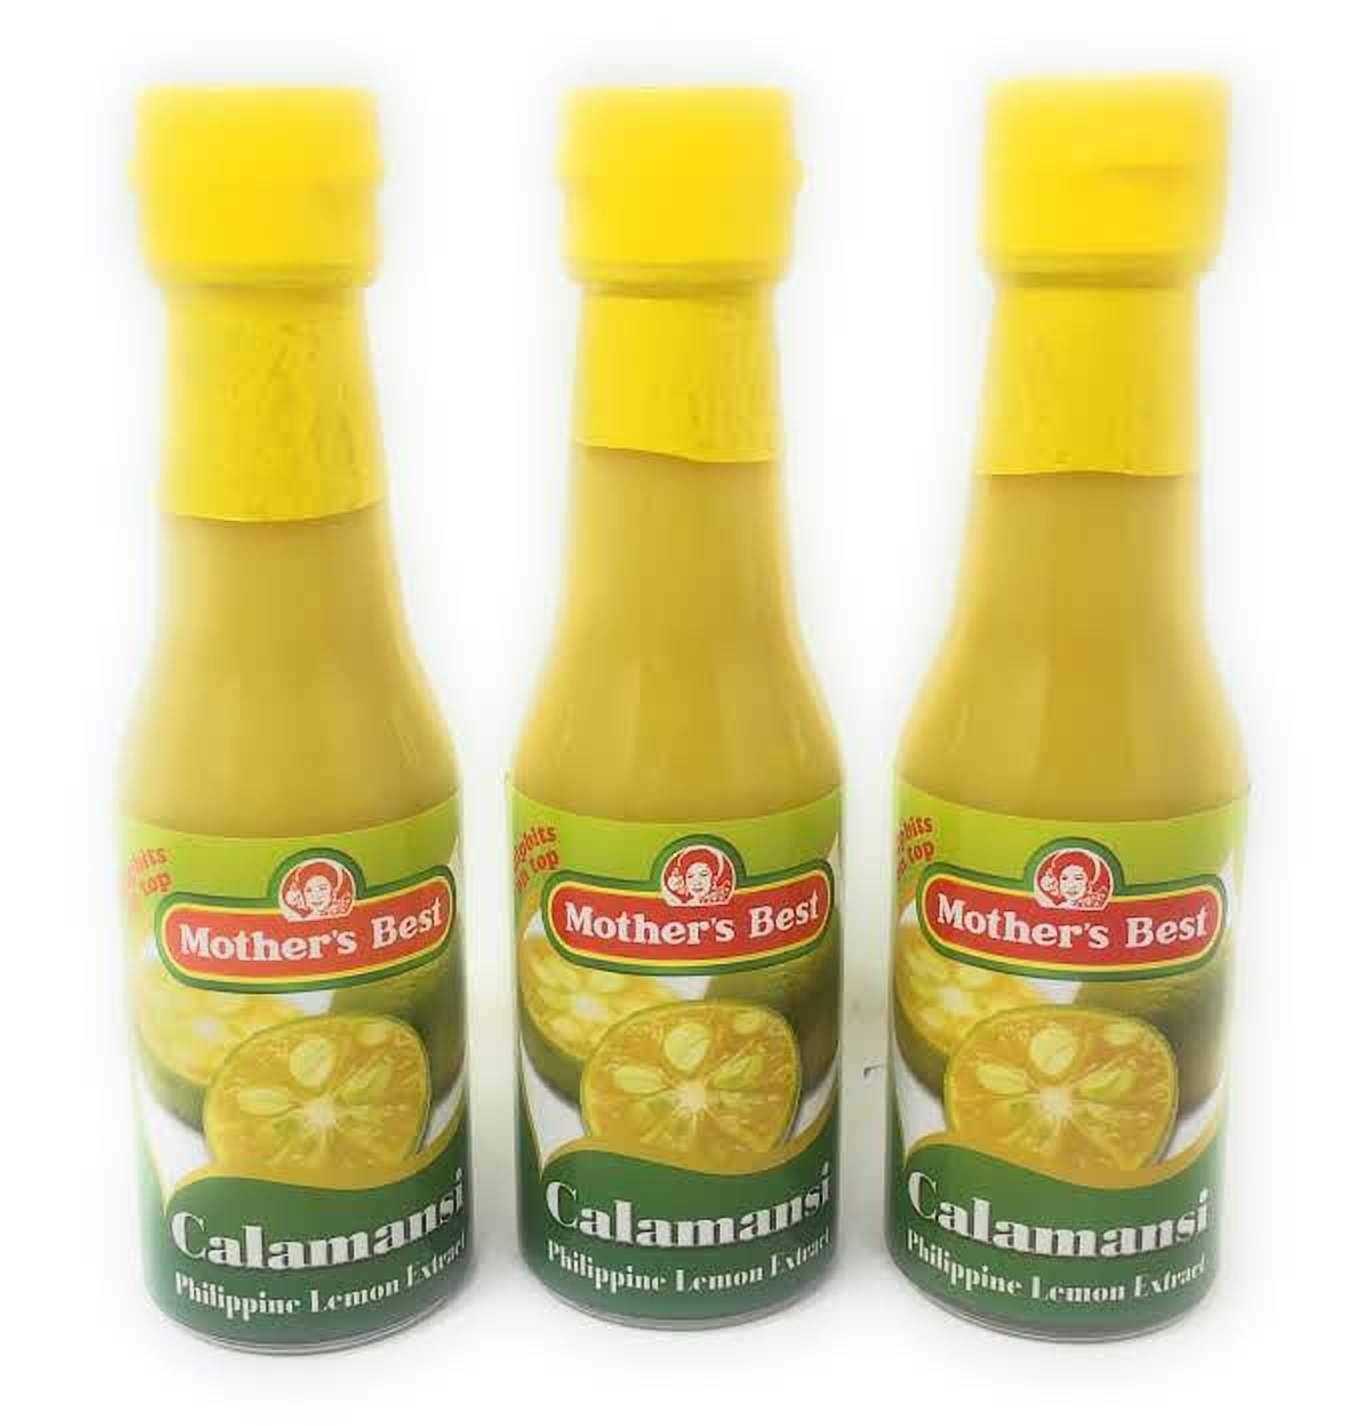 Mother's Best Calamansi Philippine Lemon Extract, Net Wt 5fl oz (150mL) 3 Pack